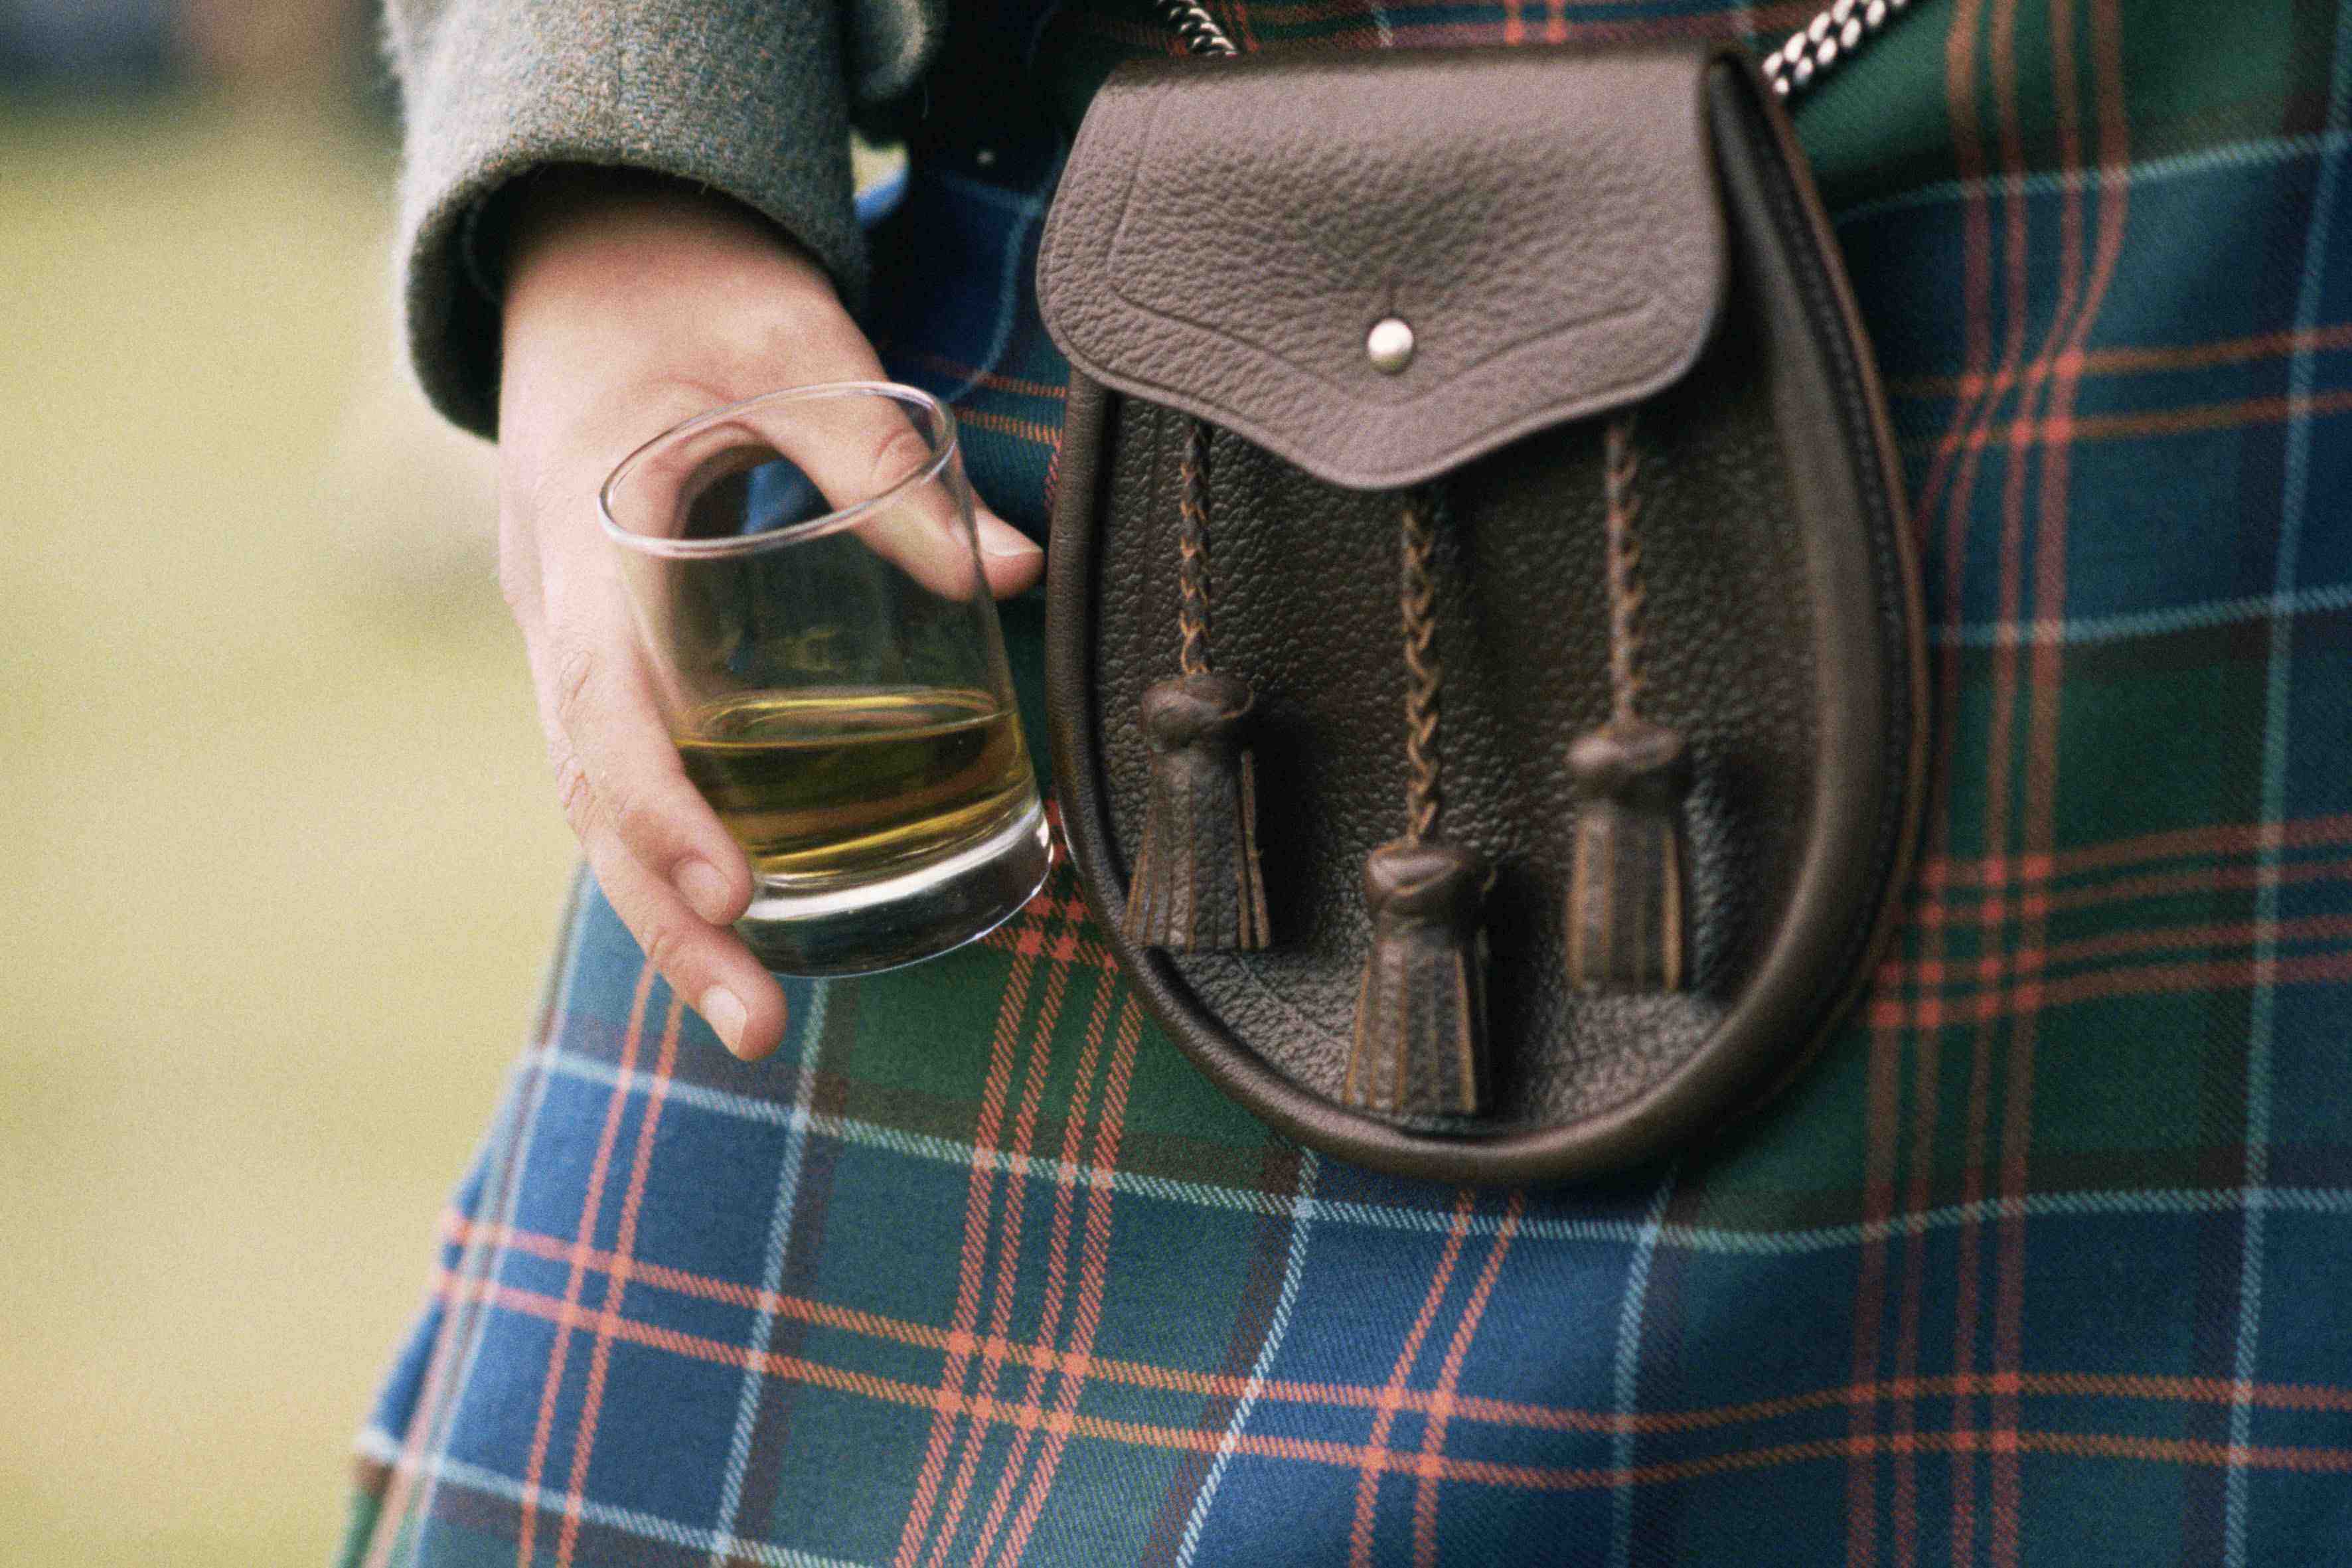 whisky tasting, Scotland - дегустация виски, Шотландия